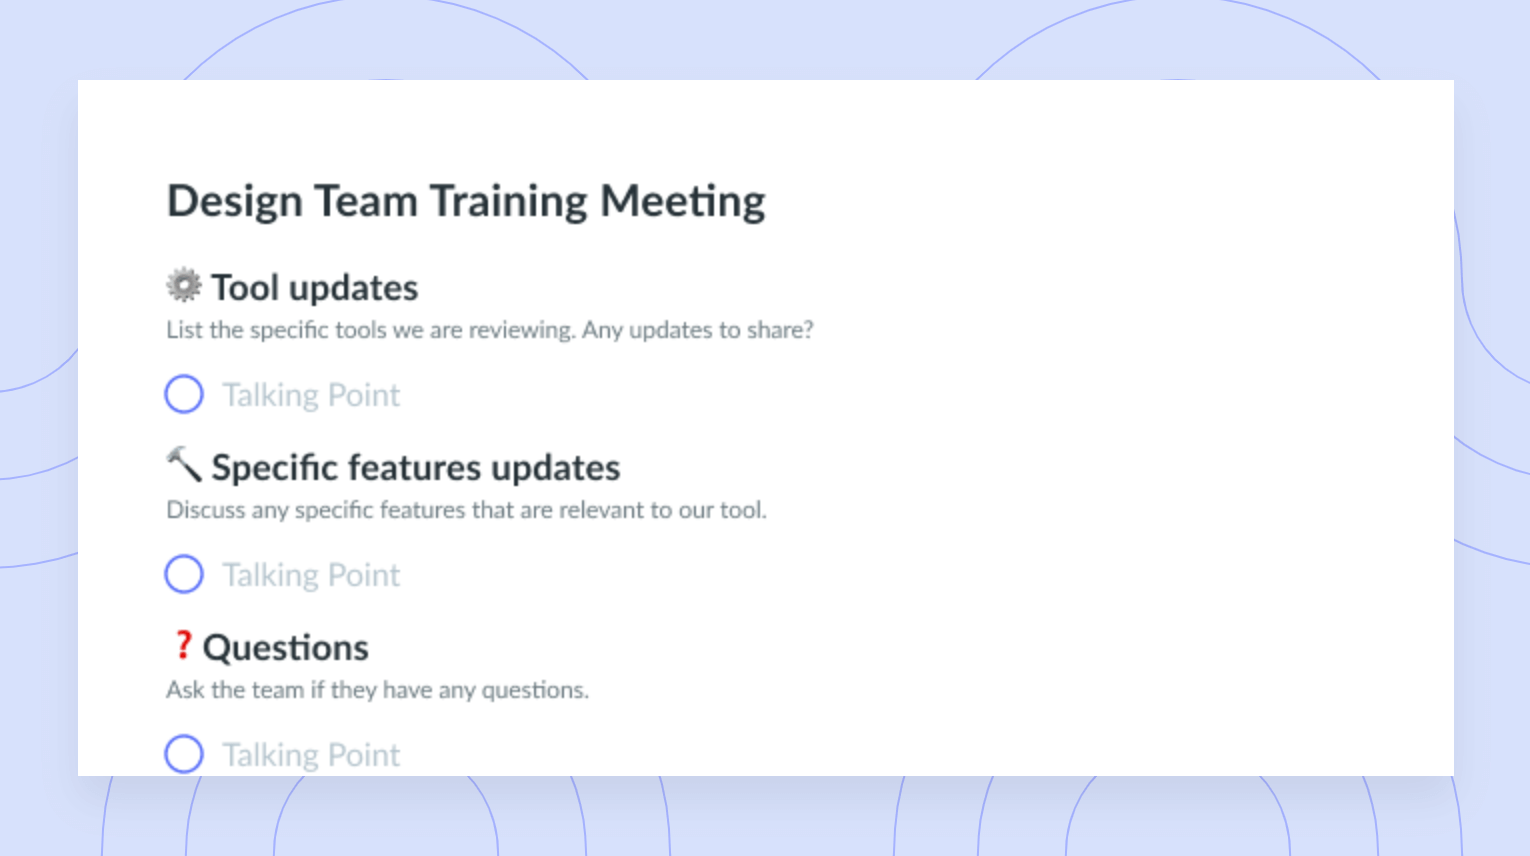 Design Team Training Meeting Template